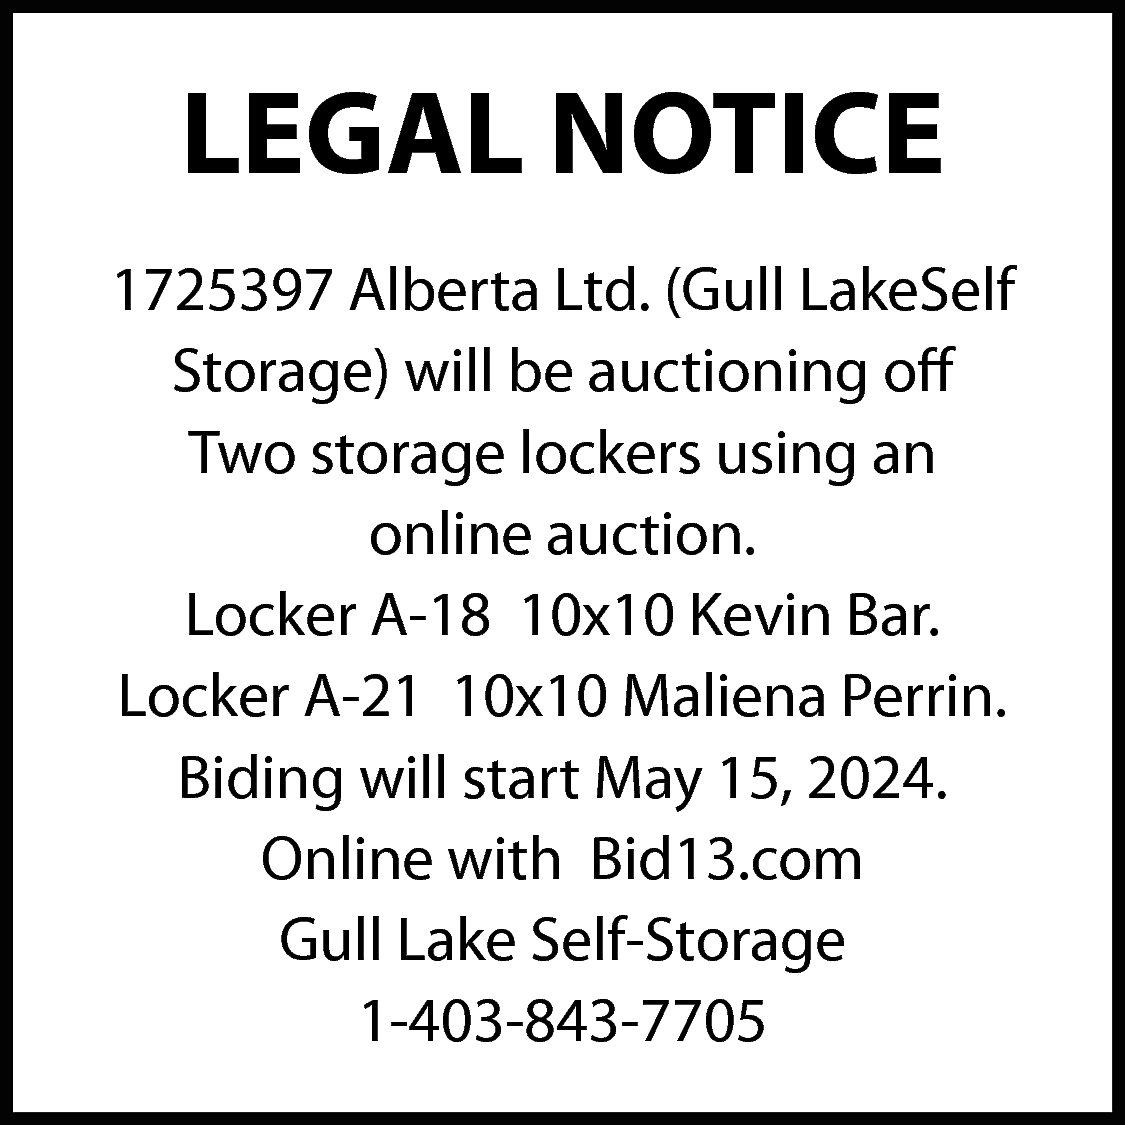 LEGAL NOTICE <br>1725397 Alberta Ltd.  LEGAL NOTICE  1725397 Alberta Ltd. (Gull LakeSelf  Storage) will be auctioning off  Two storage lockers using an  online auction.  Locker A-18 10x10 Kevin Bar.  Locker A-21 10x10 Maliena Perrin.  Biding will start May 15, 2024.  Online with Bid13.com  Gull Lake Self-Storage  1-403-843-7705    